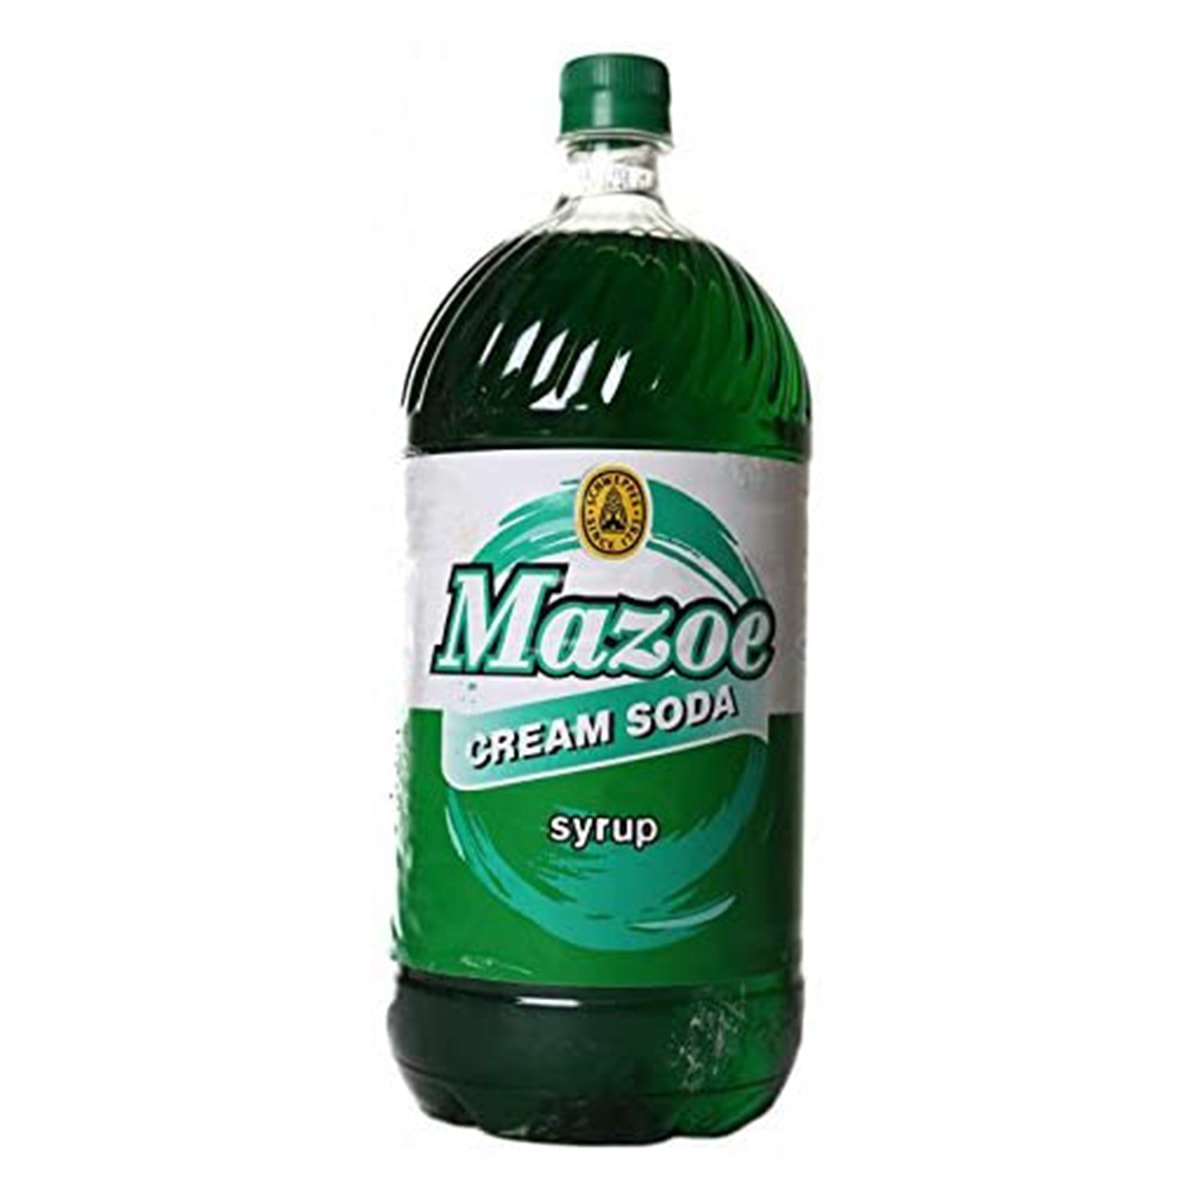 Buy Schweppes Zimbabwe Mazoe Cream Soda Syrup - 2 Litre